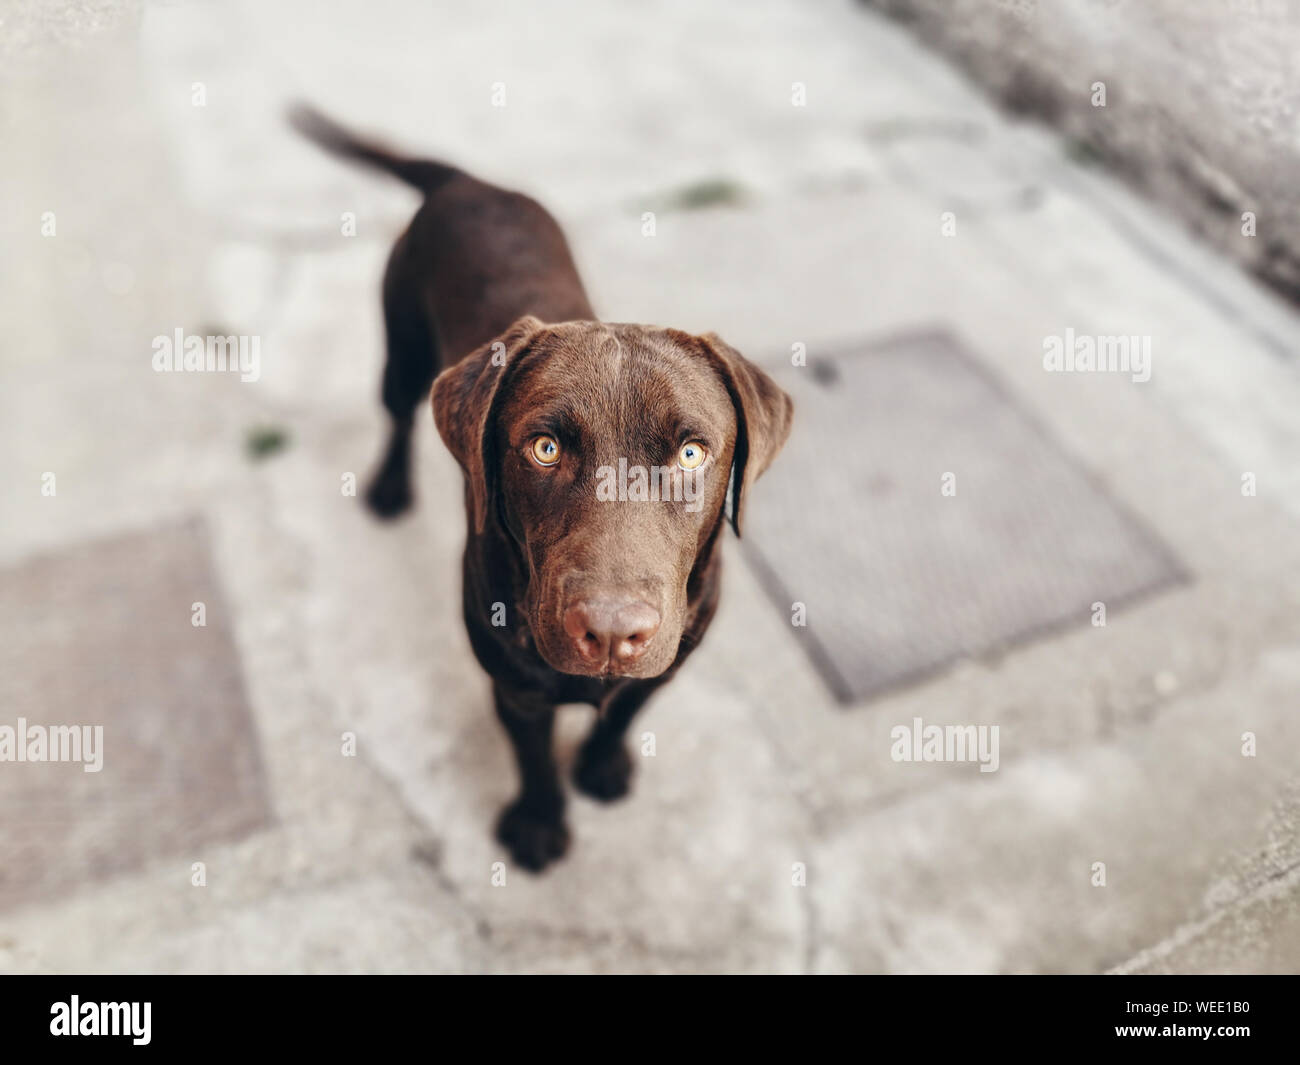 Chocolate Labrador Retriever portrait, looking into camera, depth of field Stock Photo